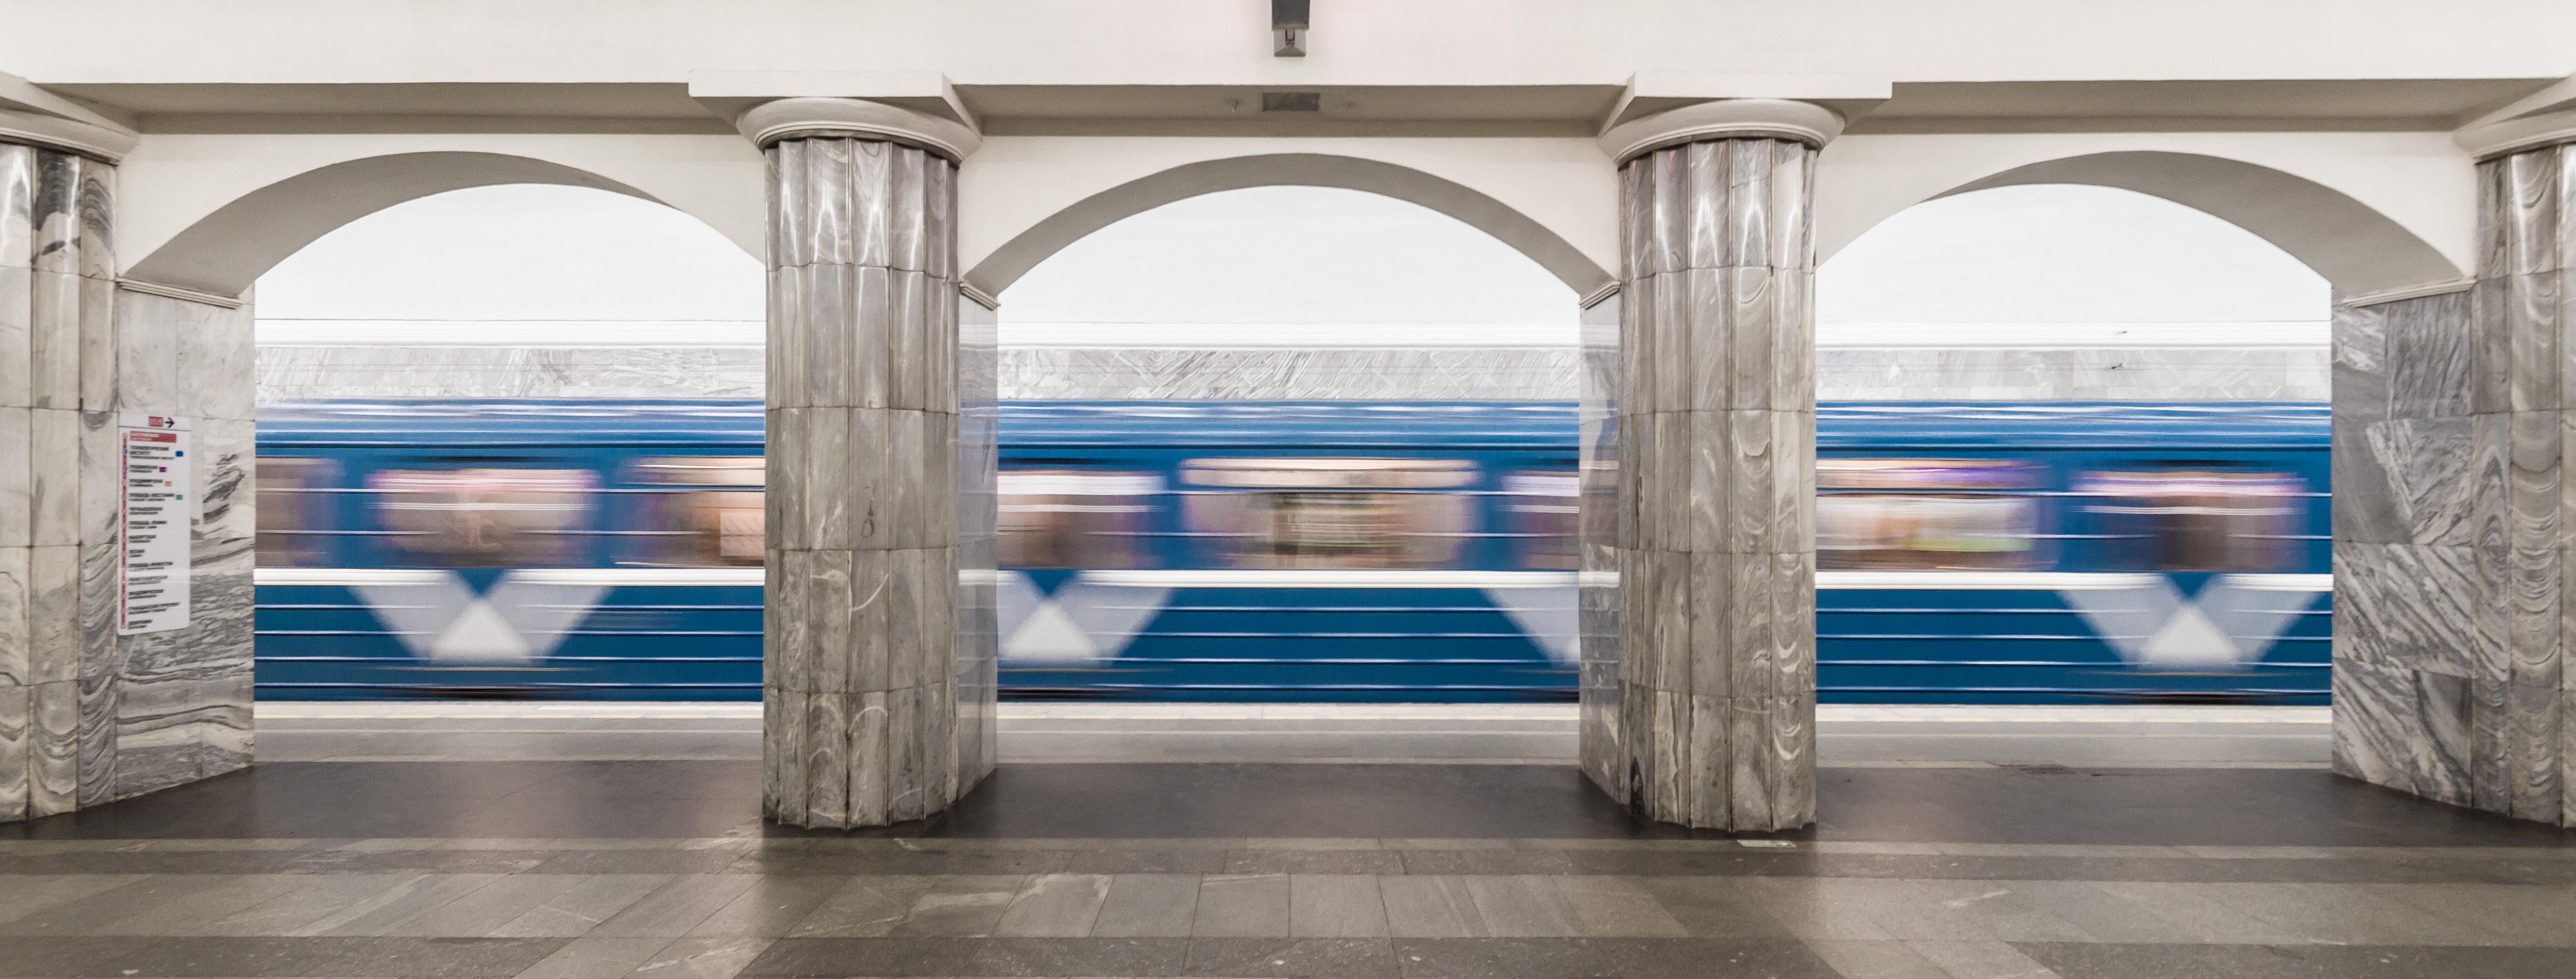 Guided Tour of Saint Petersburg's Metro